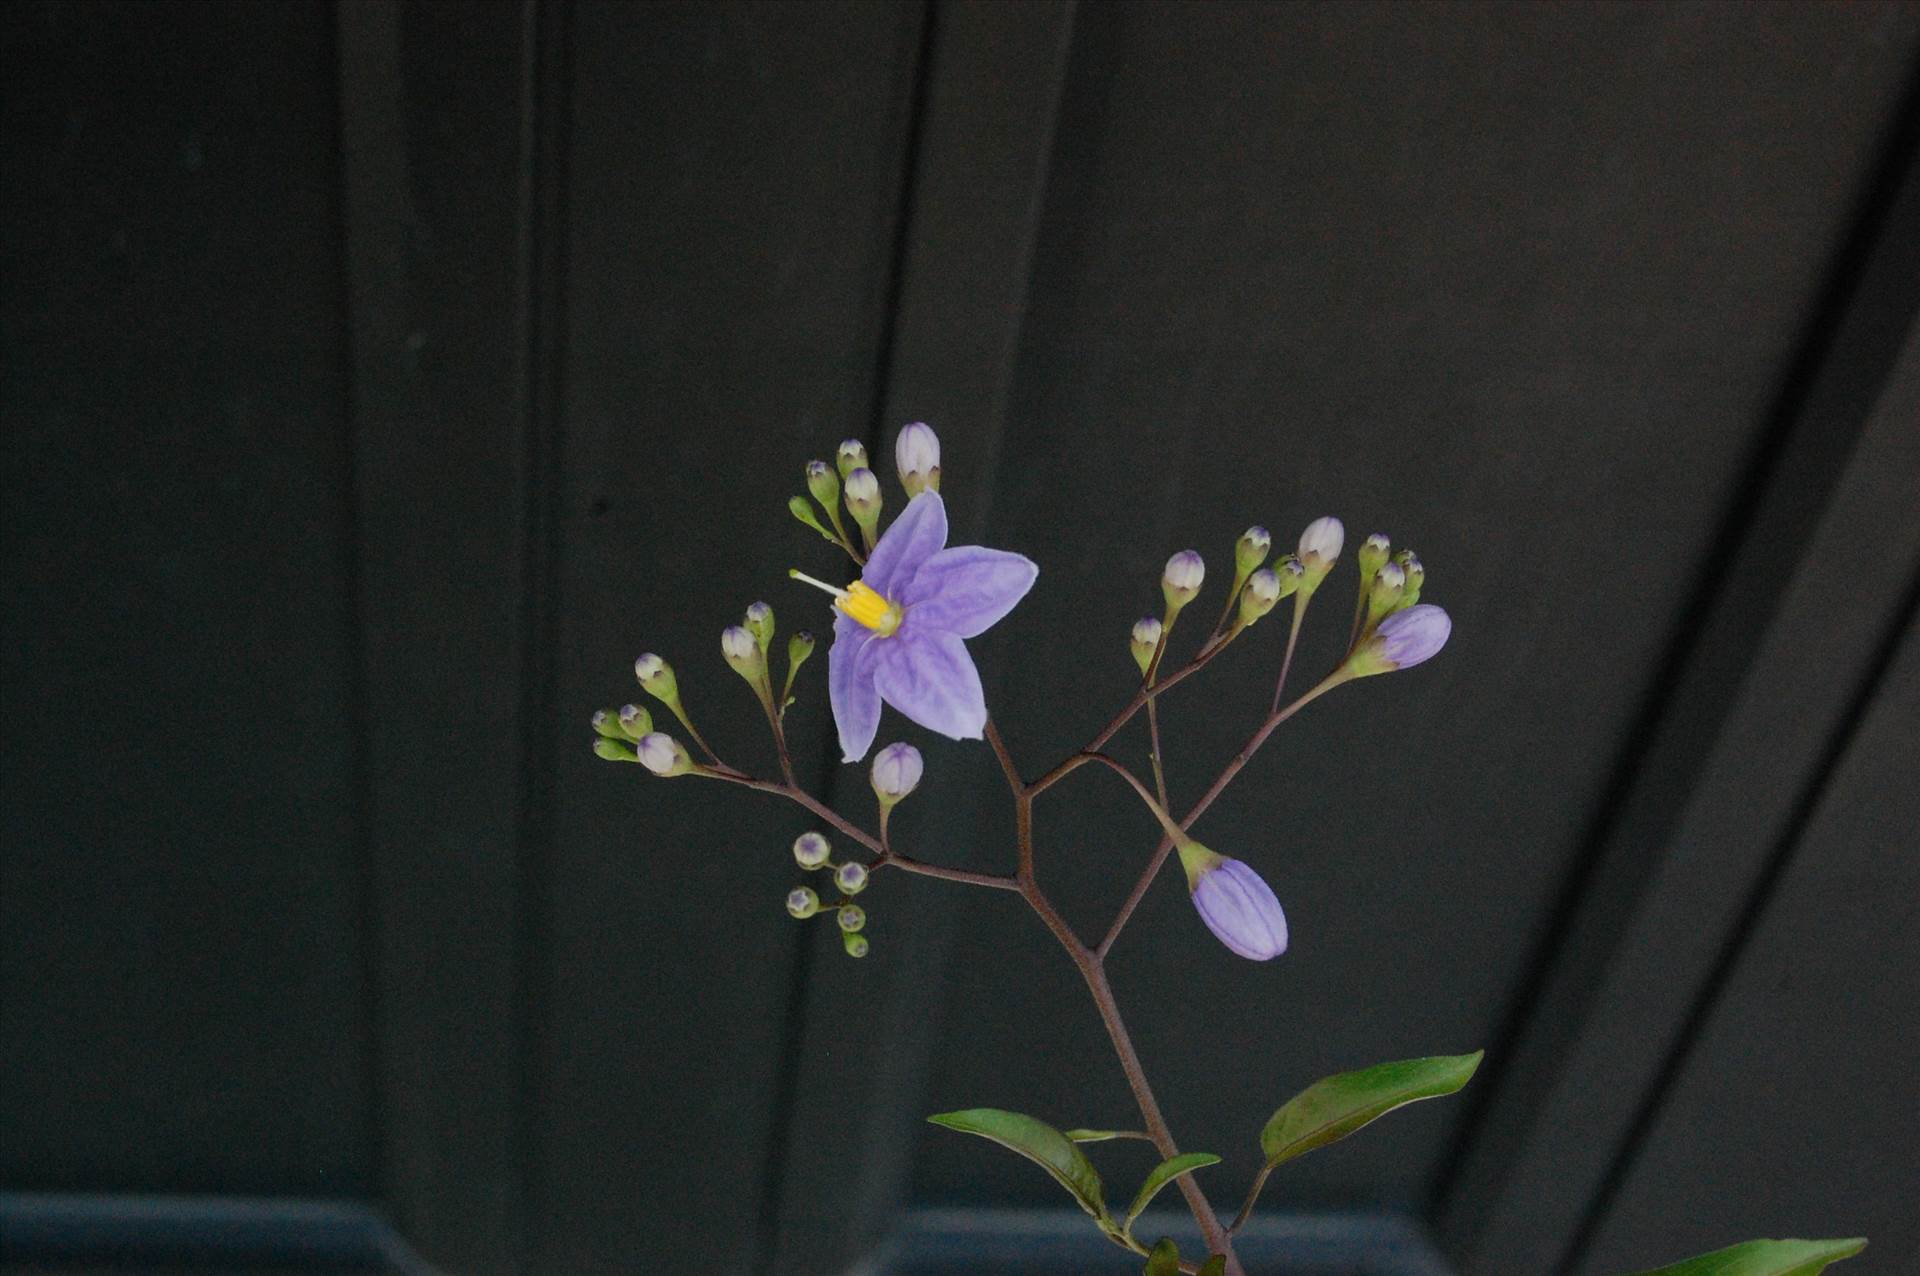 Jasmine nightshade_Solanum jasminoides.jpg  by Cantaloupe1